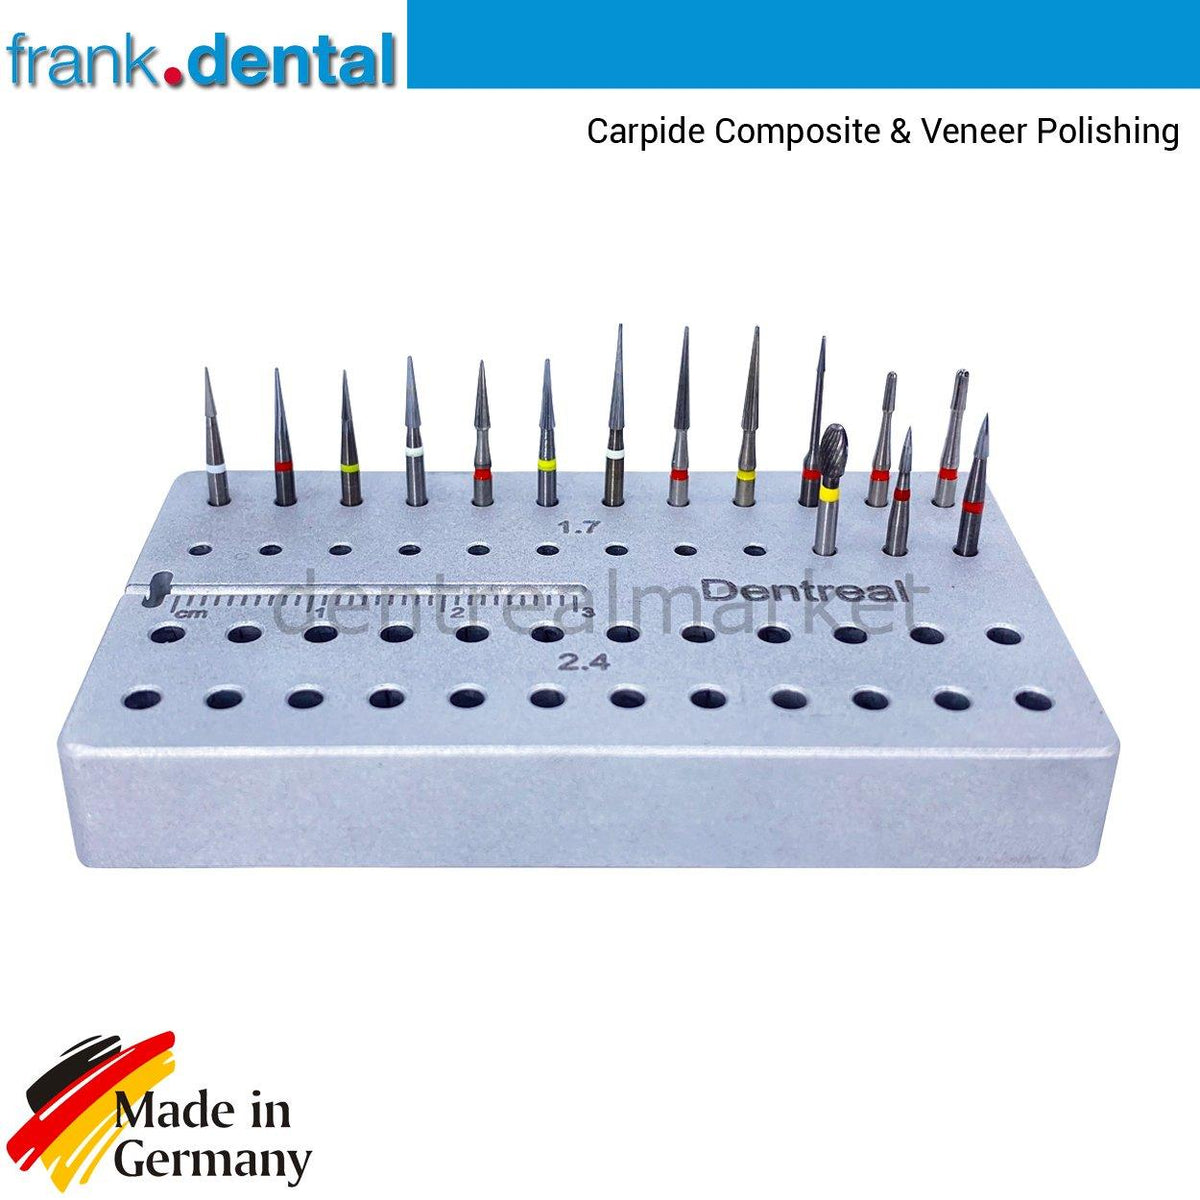 DentrealStore - Frank Dental Carpide Composite and Veneer Polishing Bur Set